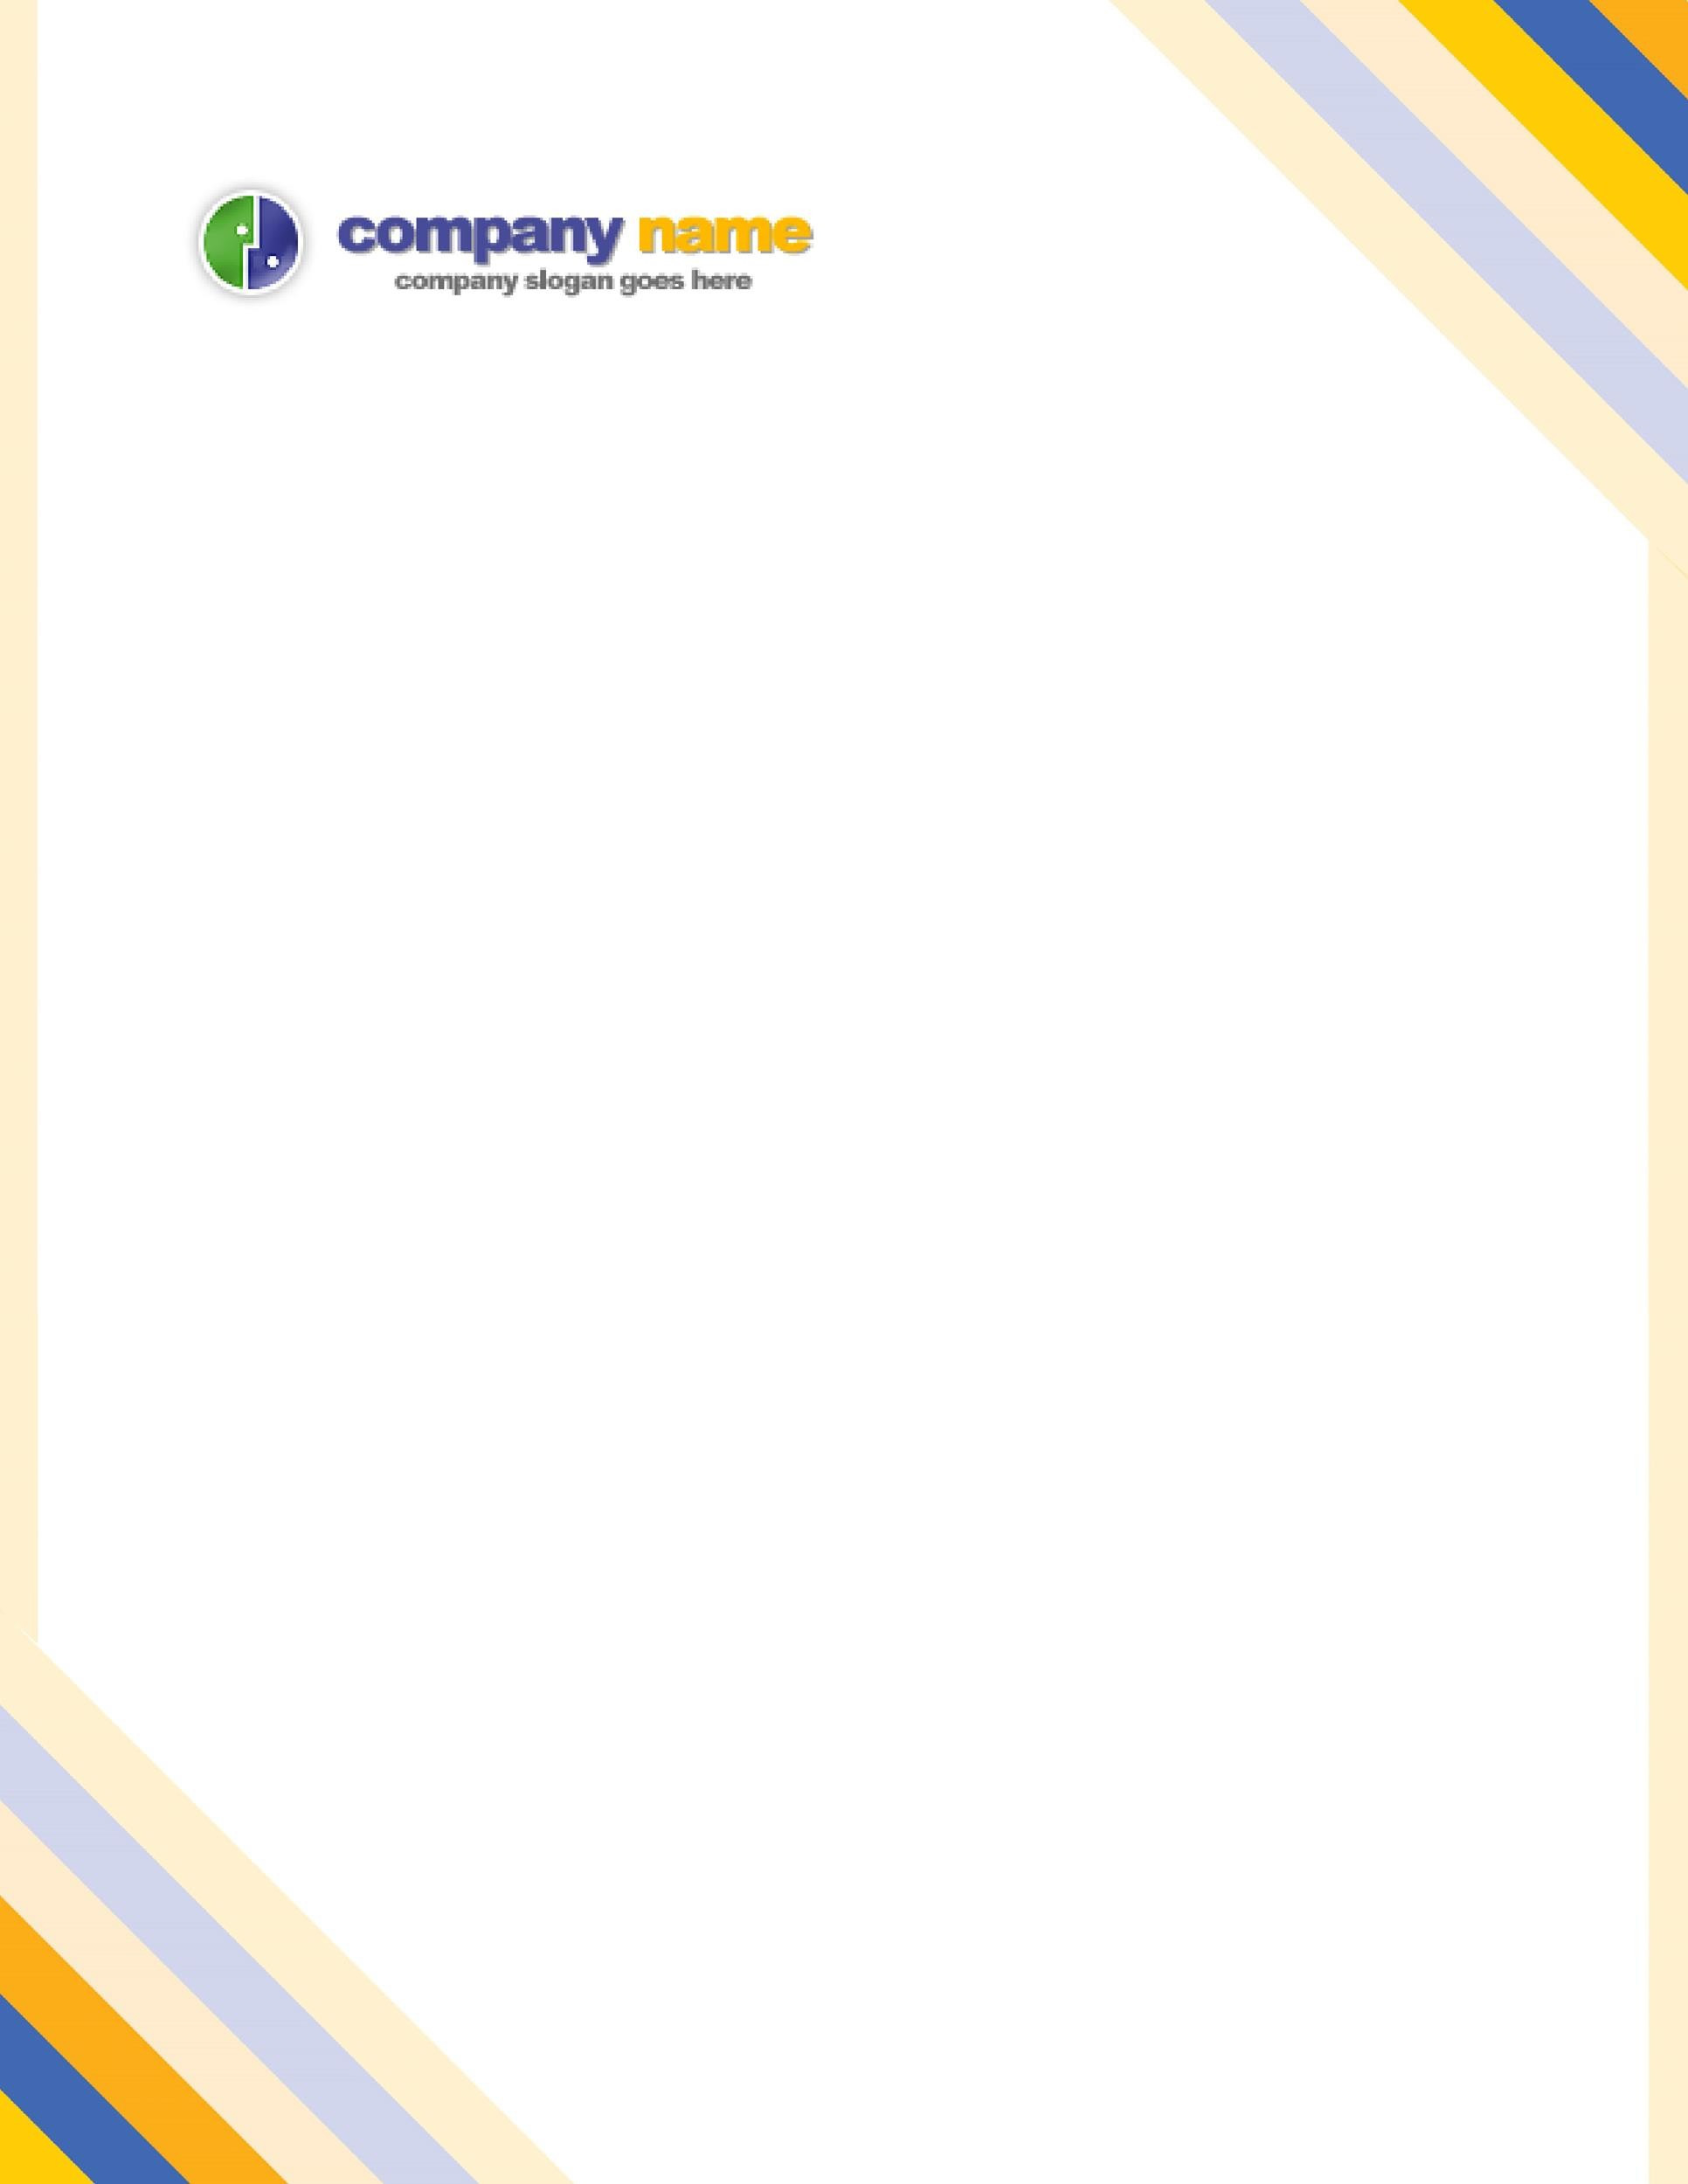 association-letterhead-sample-master-of-template-document